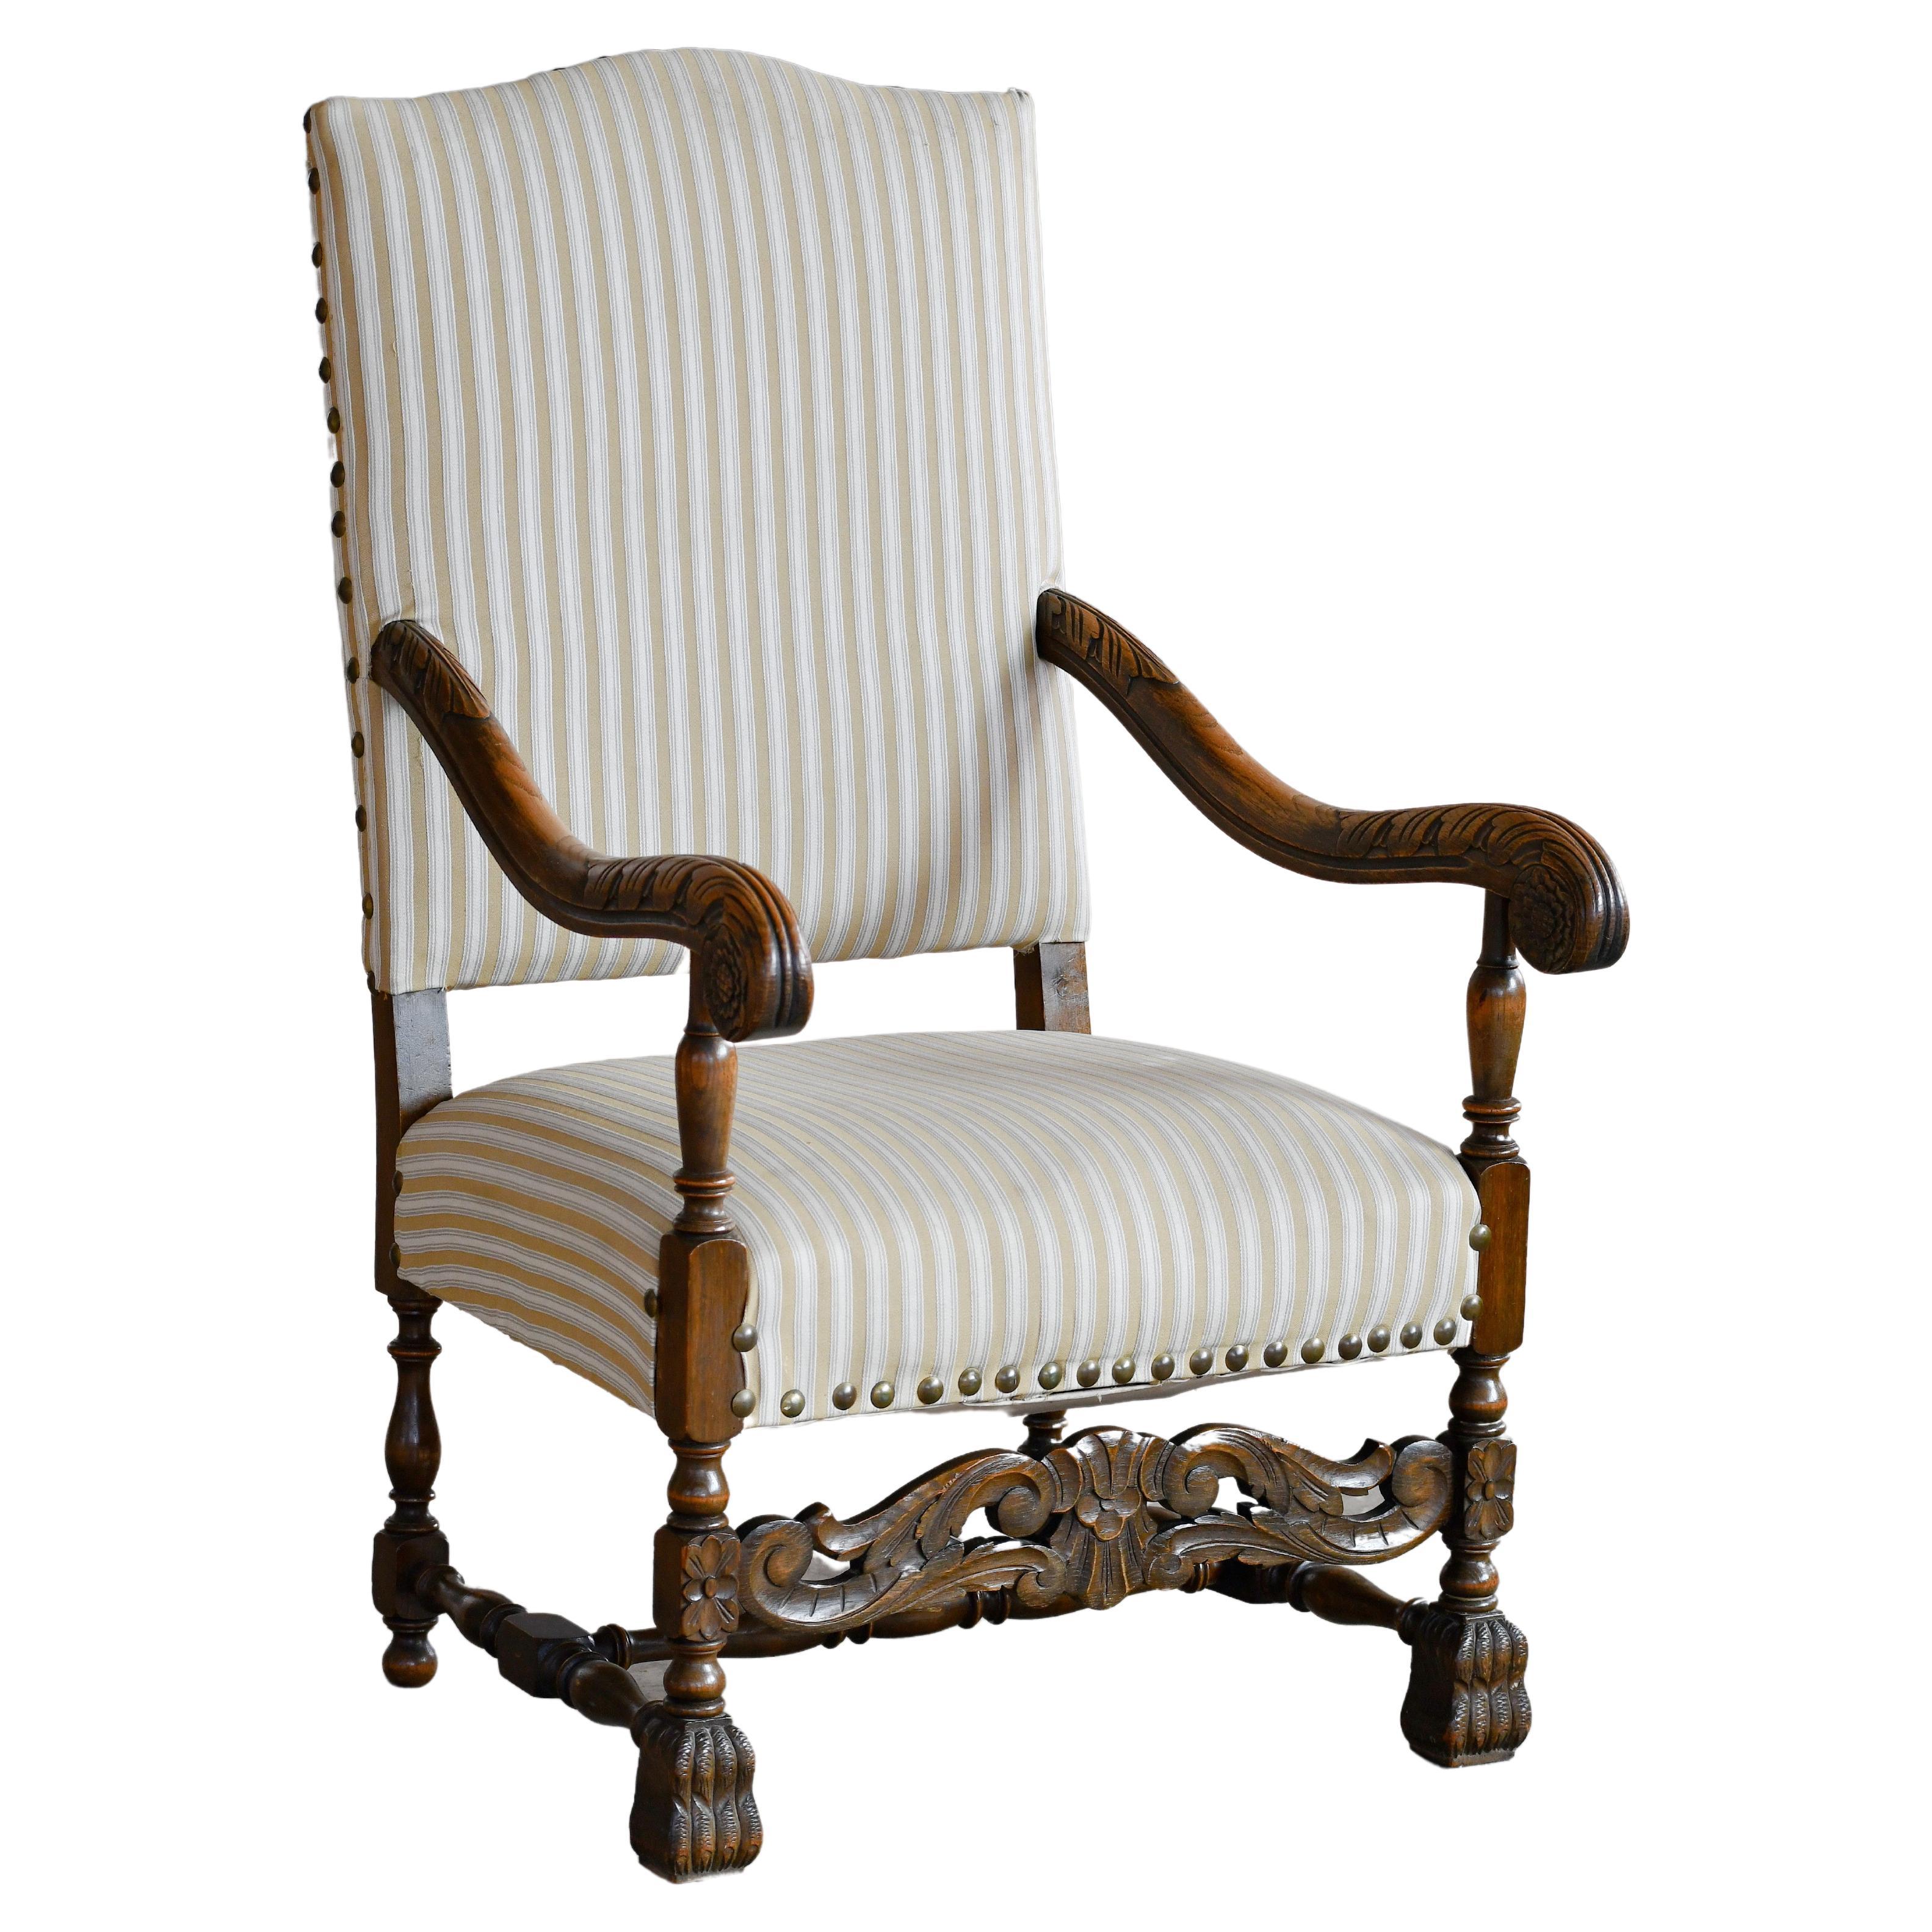 Danish Throne Chair in Carved Oak, circa 1900 Bindesboll Style